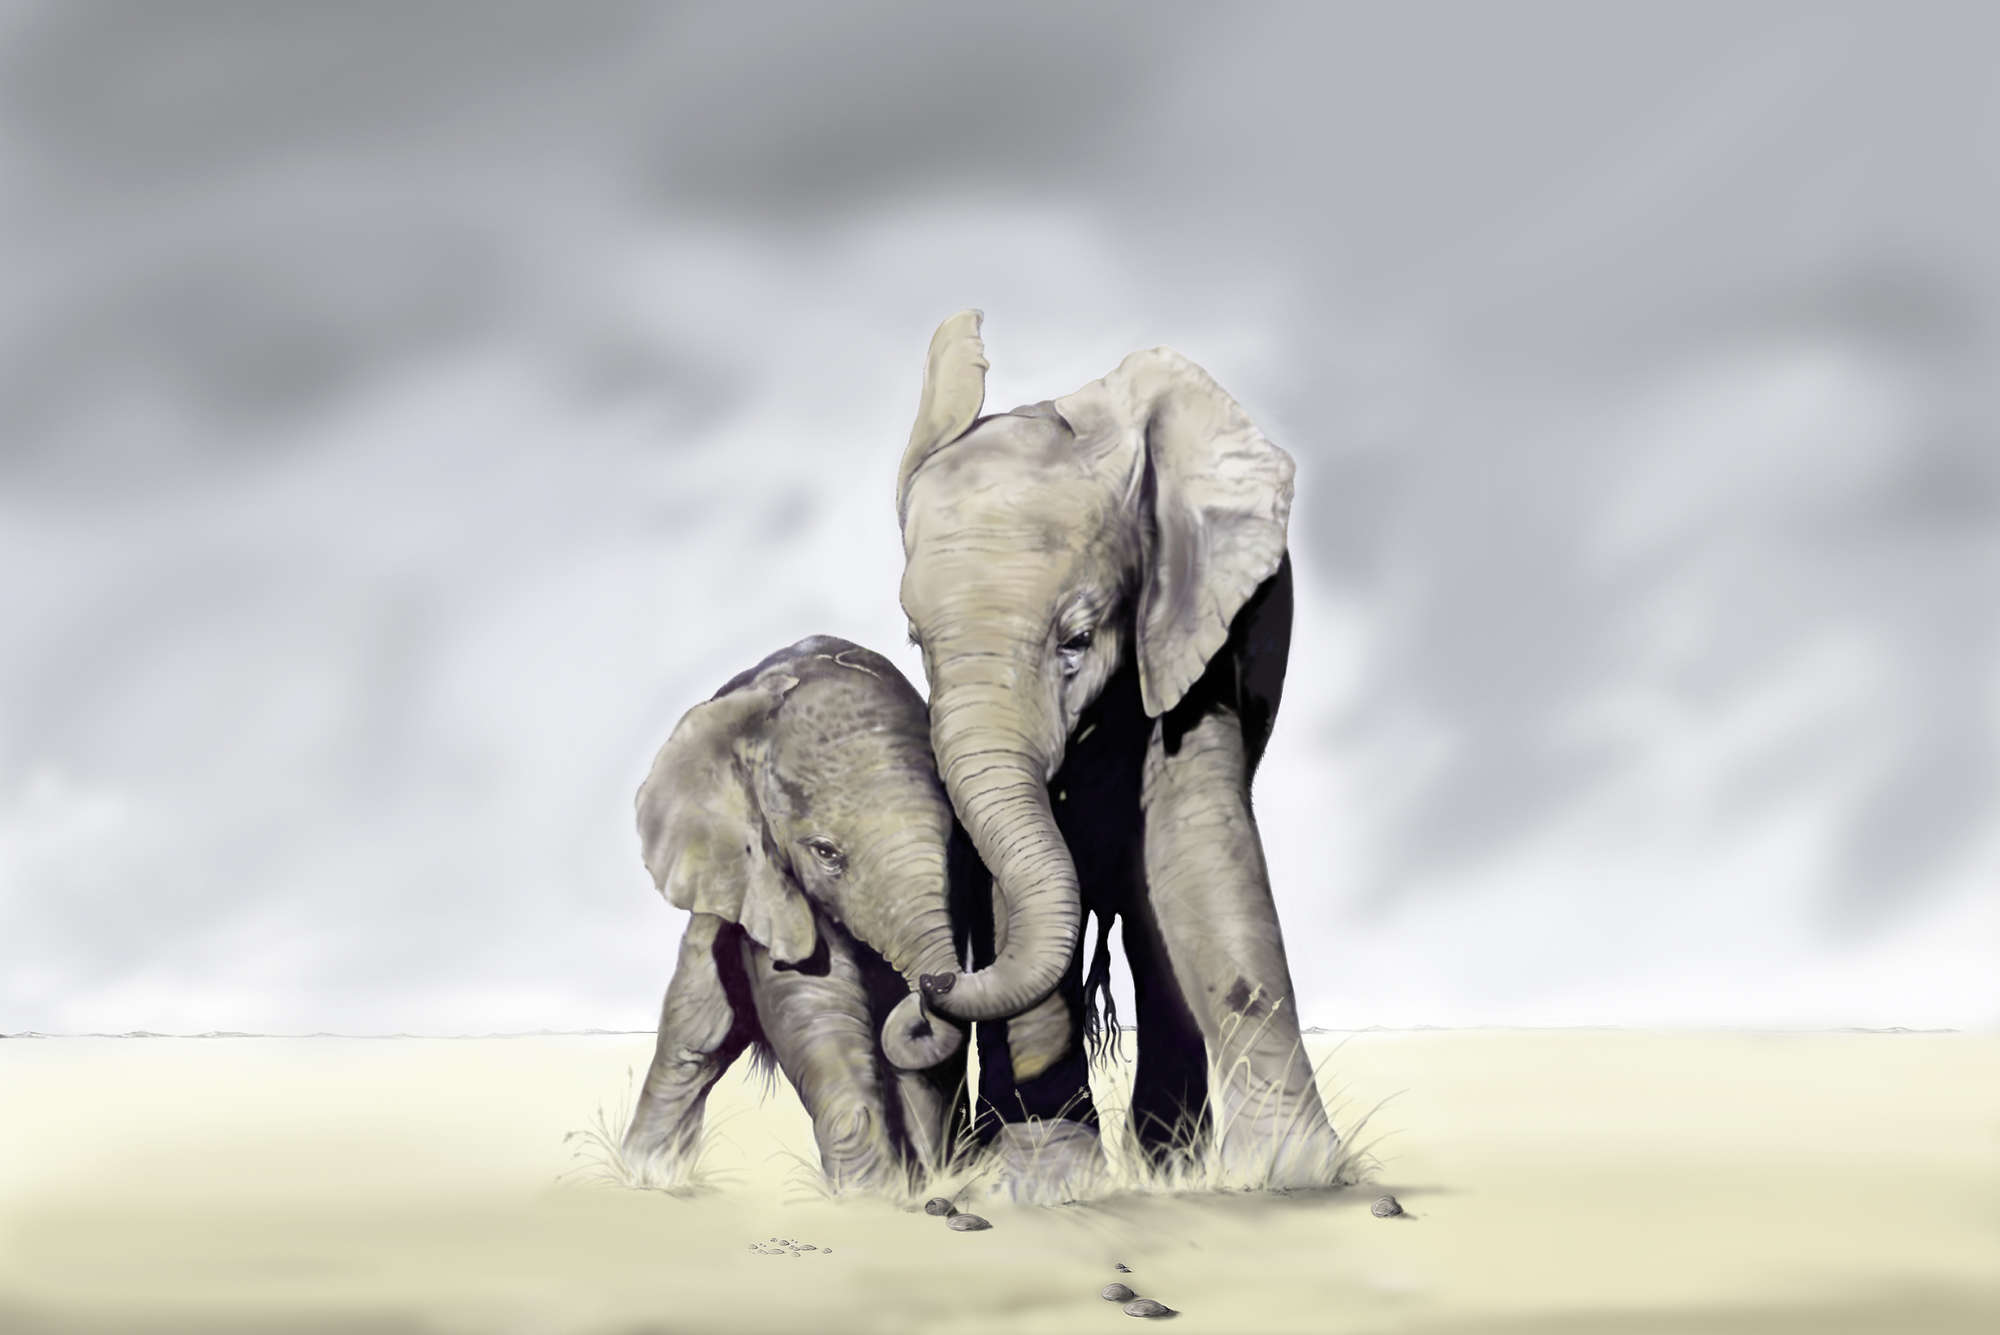             Animal Wallpaper Free Elephants - Matt Smooth Non-woven
        